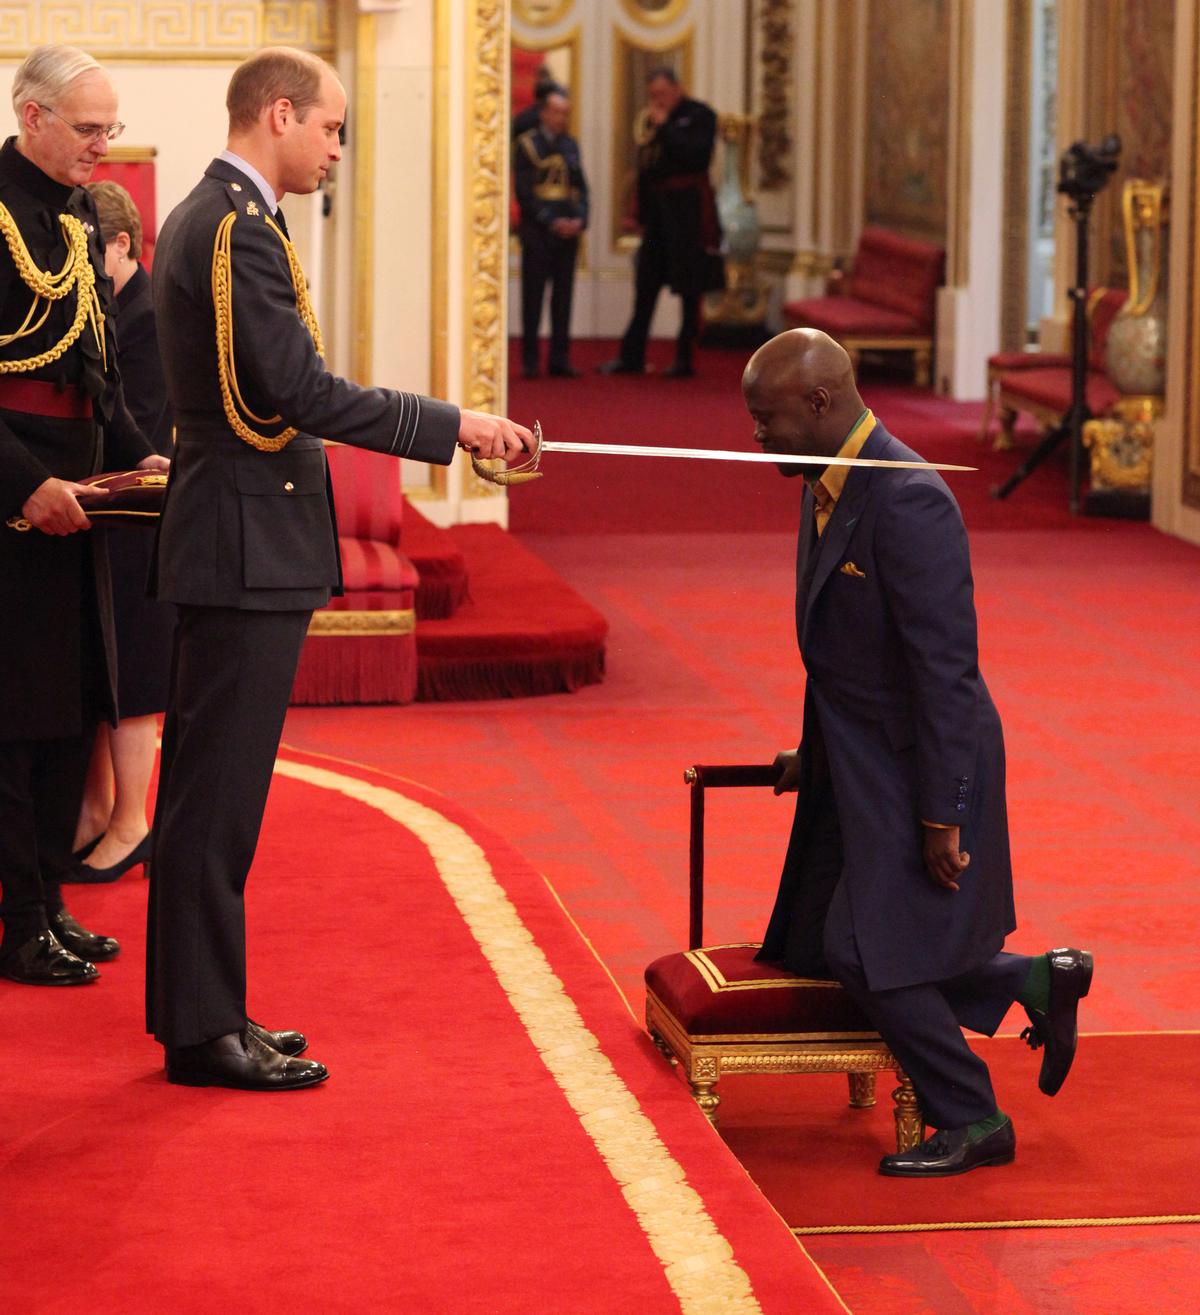 Sir David Adjaye being knighted.